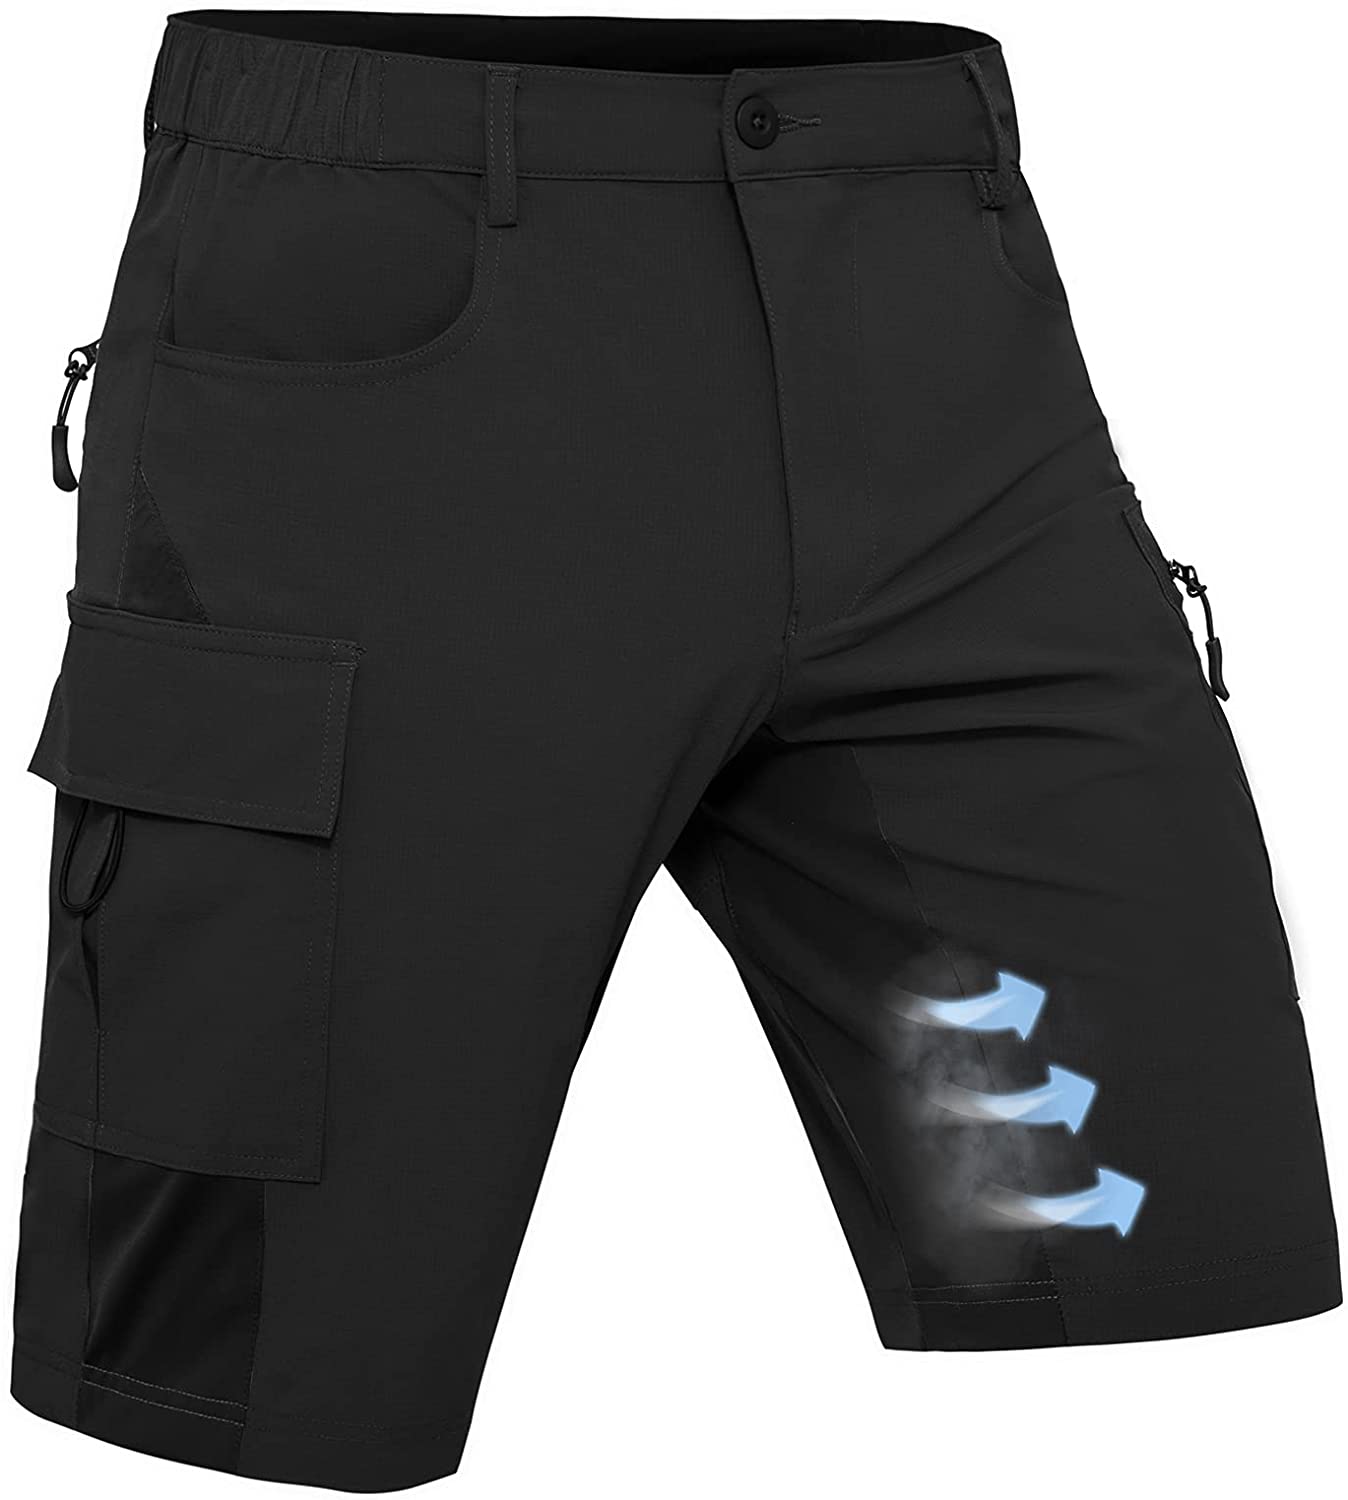 Hiauspor Men's Hiking Cargo Shorts Lightweight Quick Dry Stretch MTB S